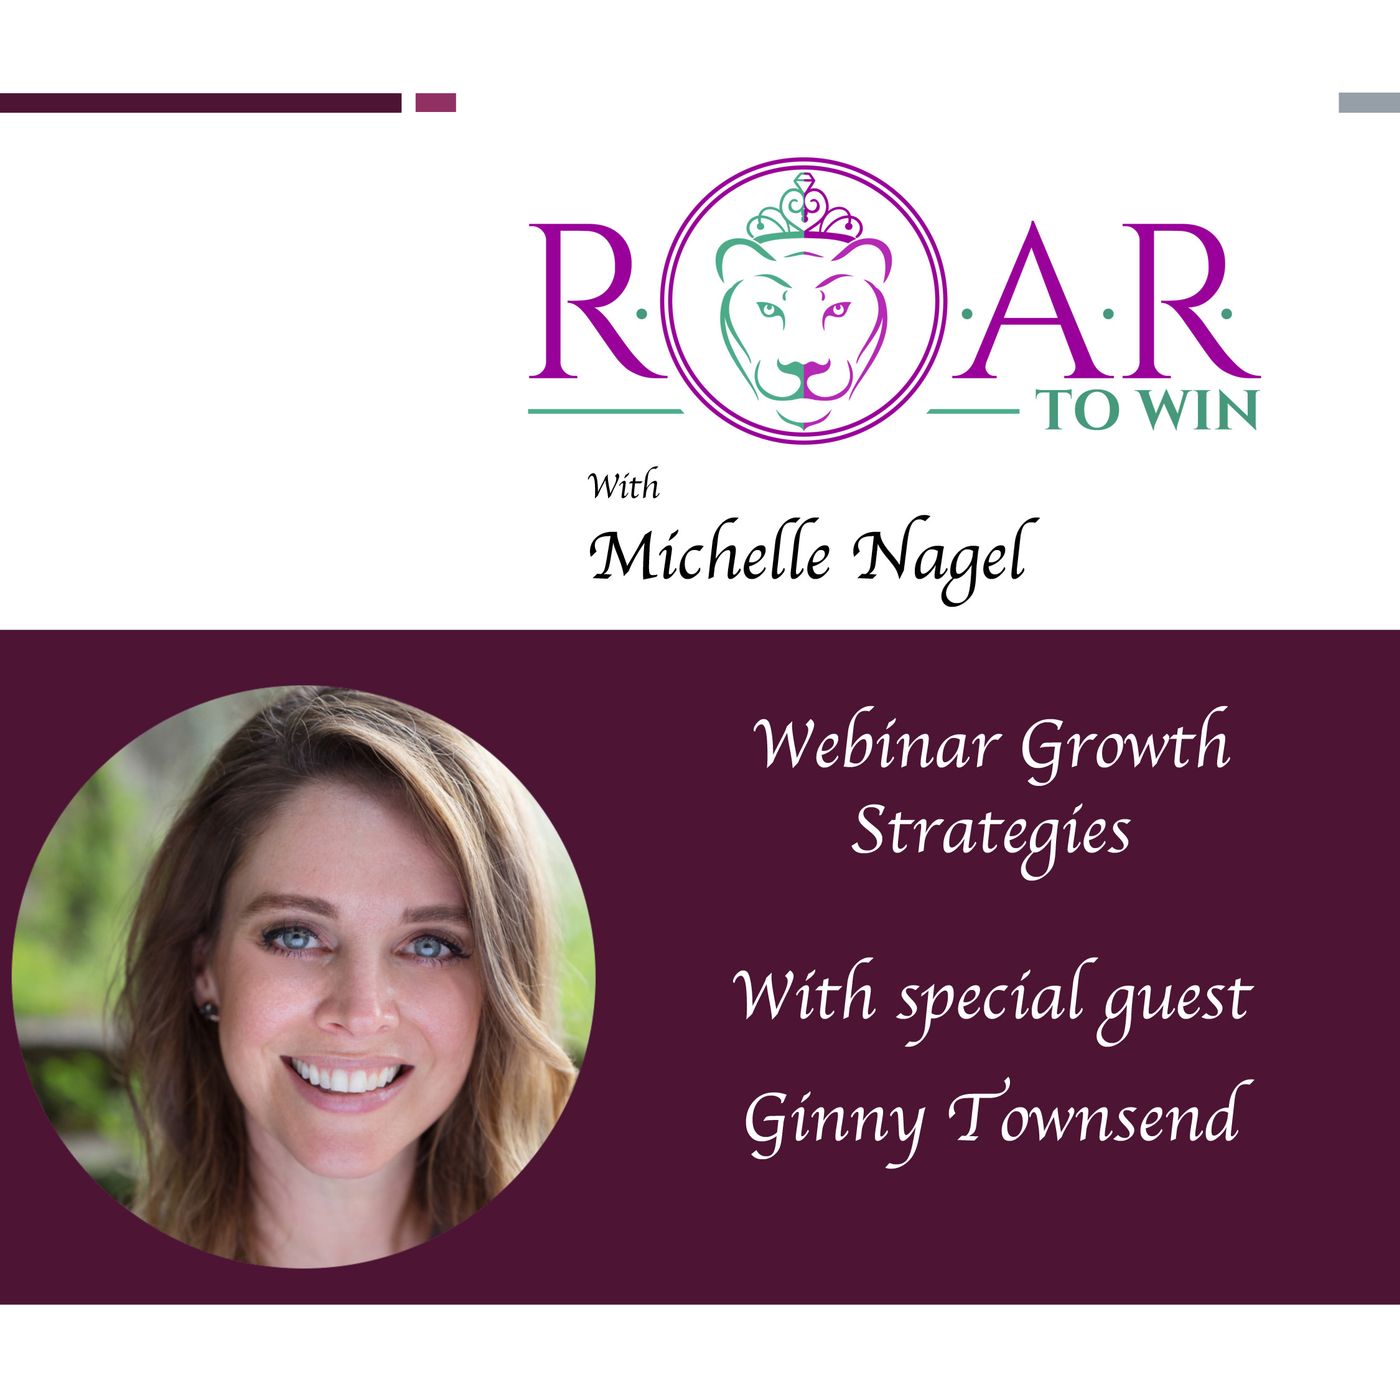 Webinar Growth Strategies with Ginny Townsend